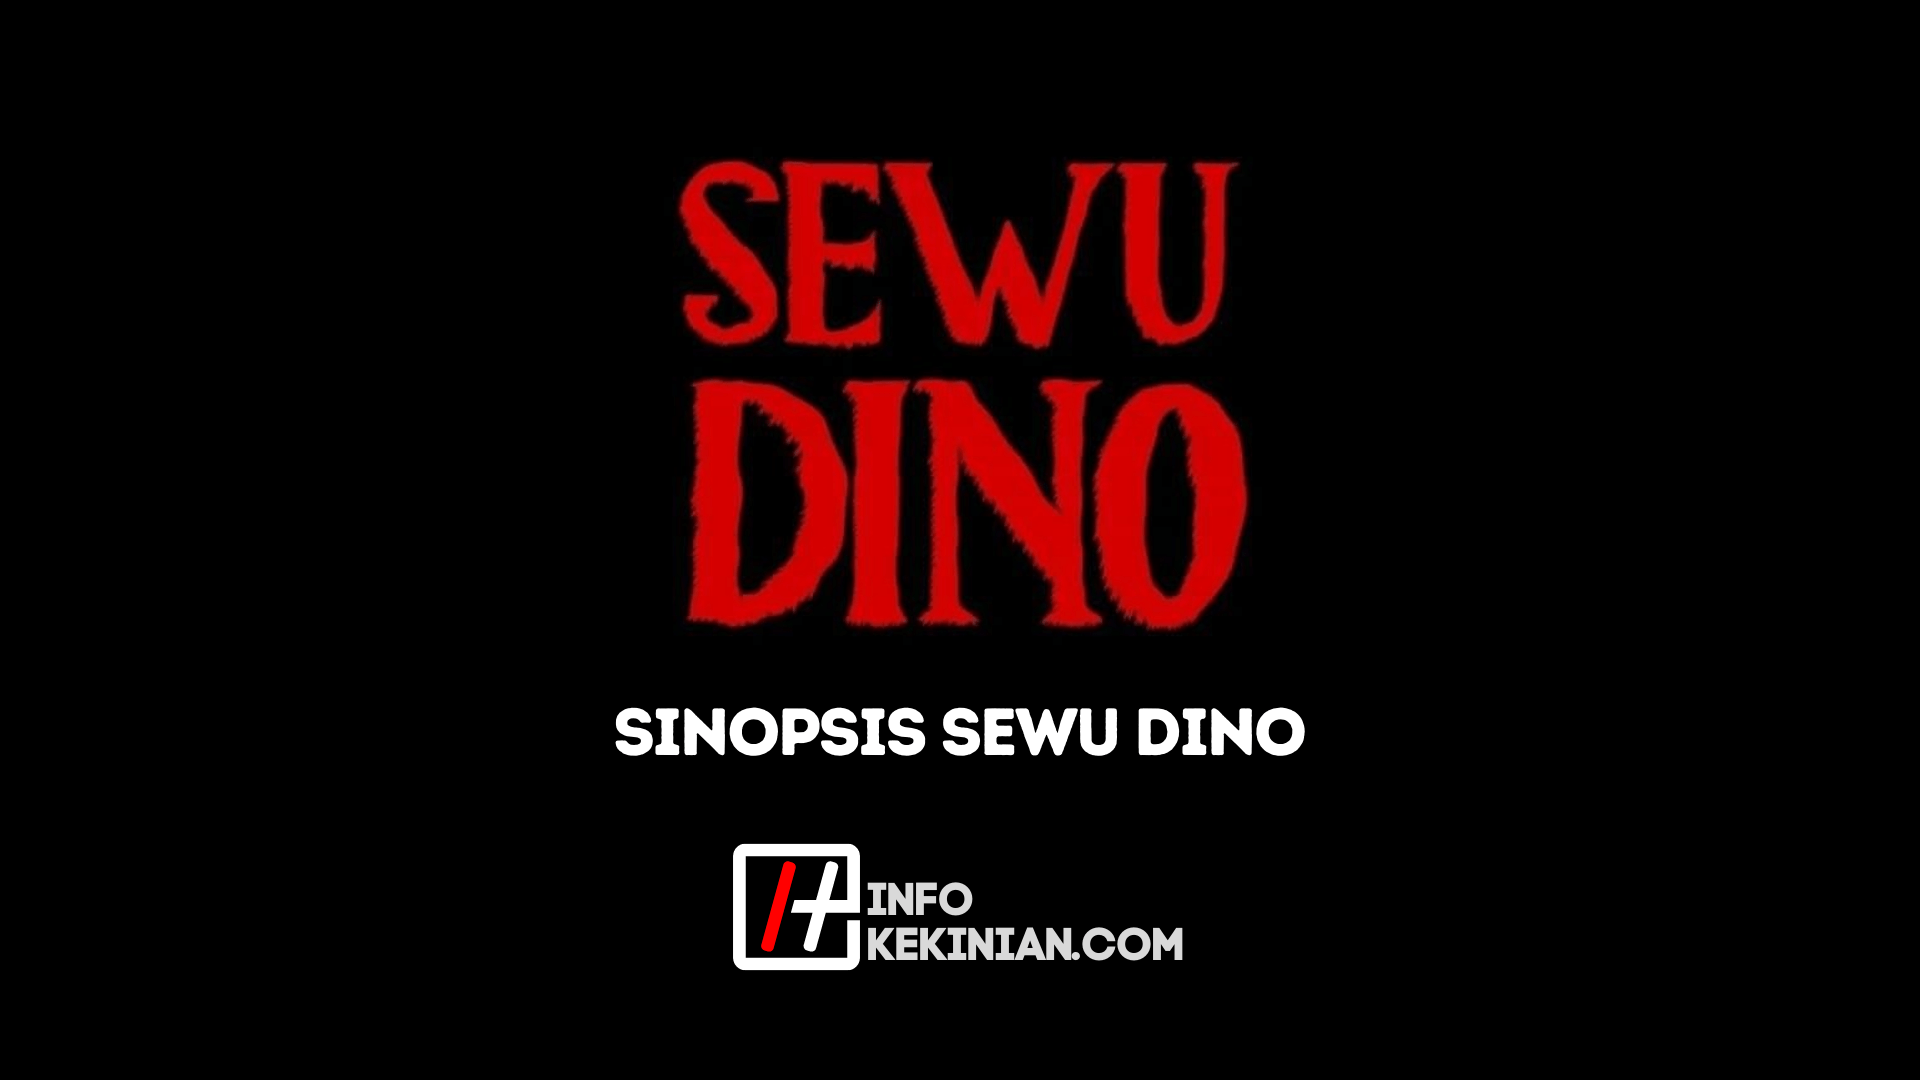 Synopsis Sewu Dino